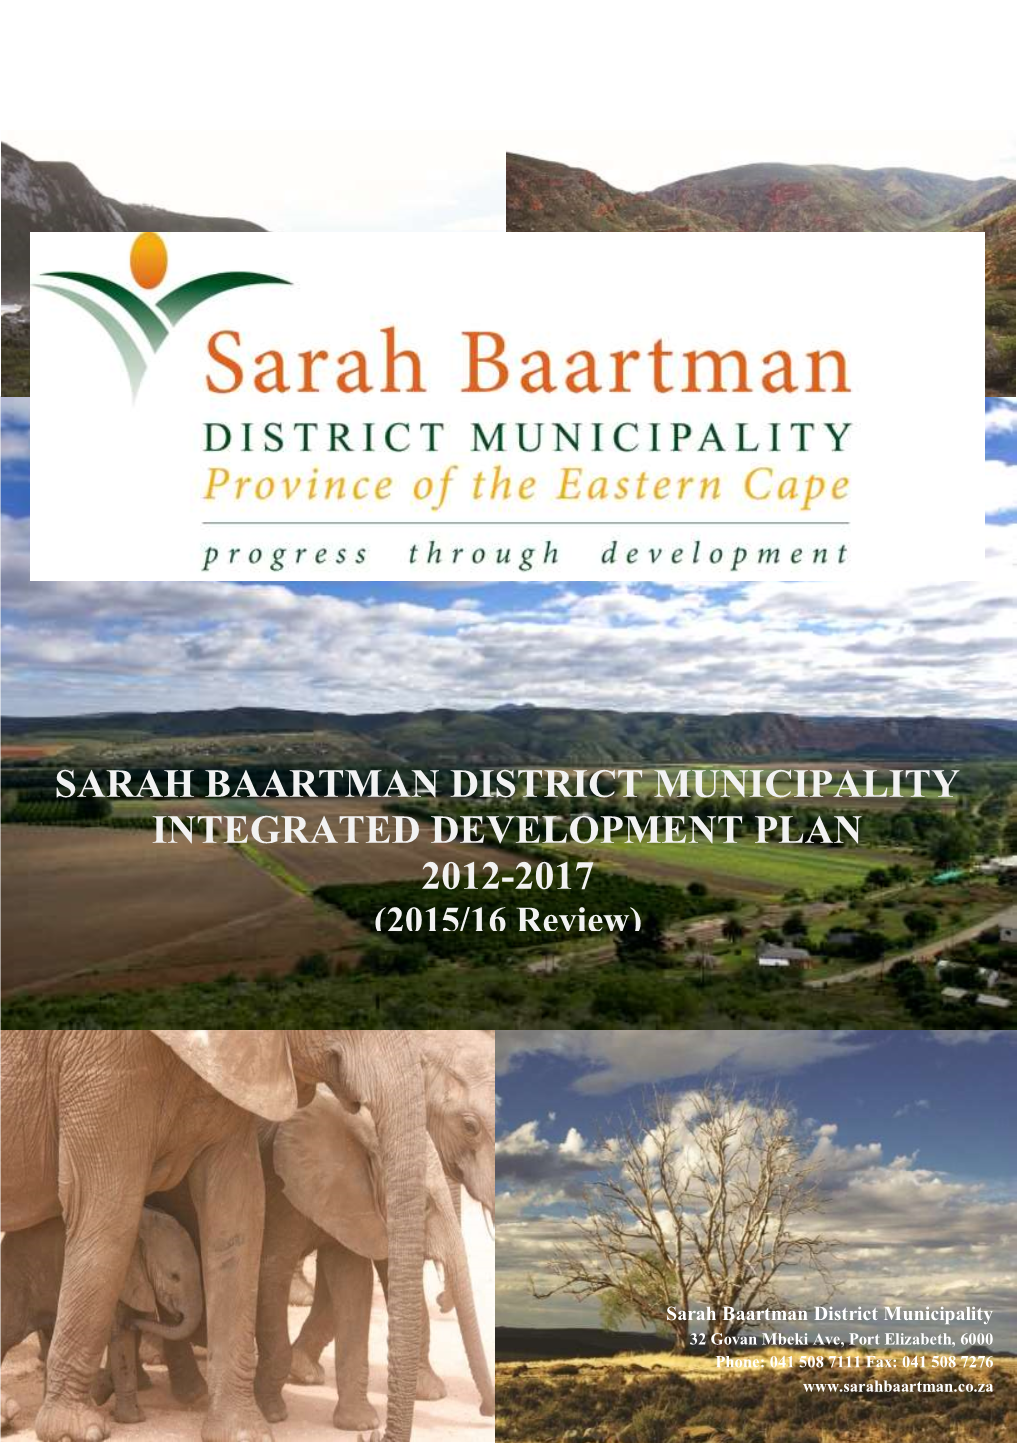 SARAH BAARTMAN DISTRICT MUNICIPALITY INTEGRATED DEVELOPMENT PLAN 2012-2017 (2015/16 Review) 2015/16 Review